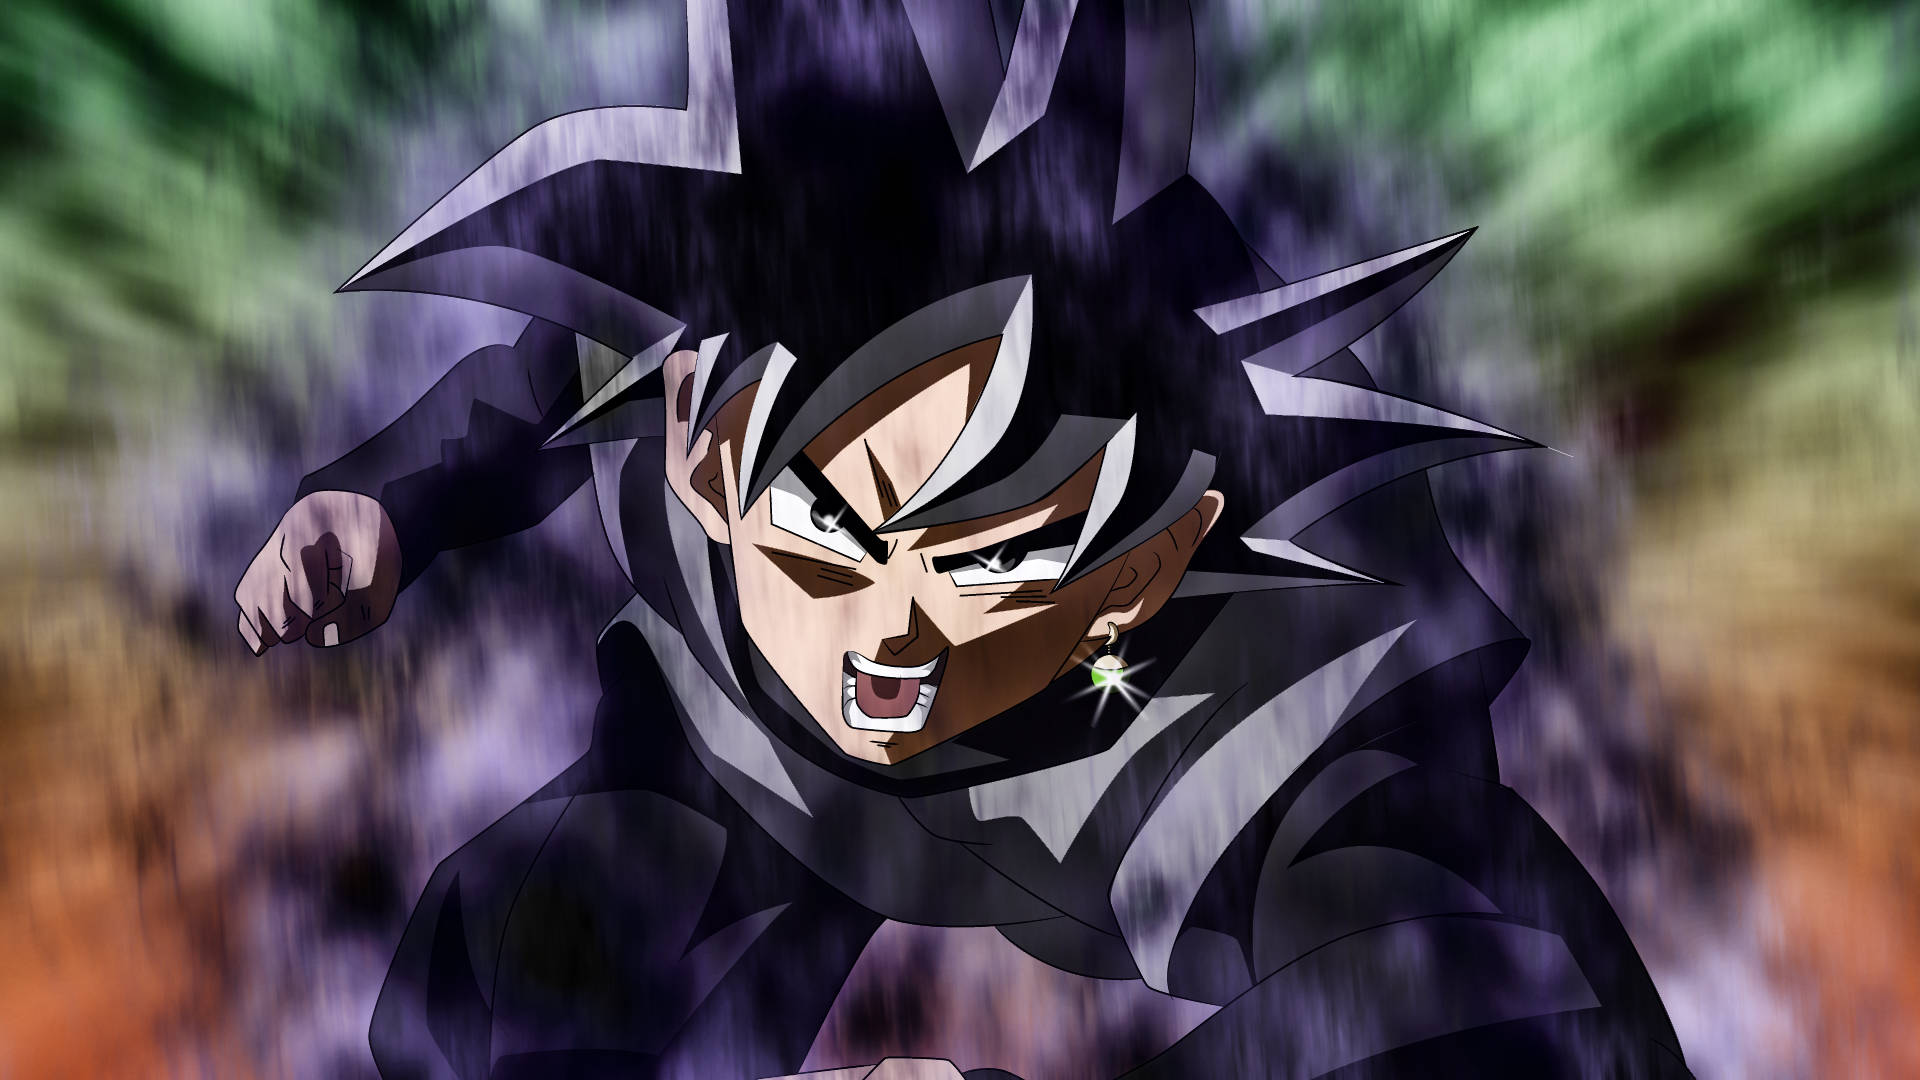 Goku Black Unleashing a Powerful Attack Wallpaper